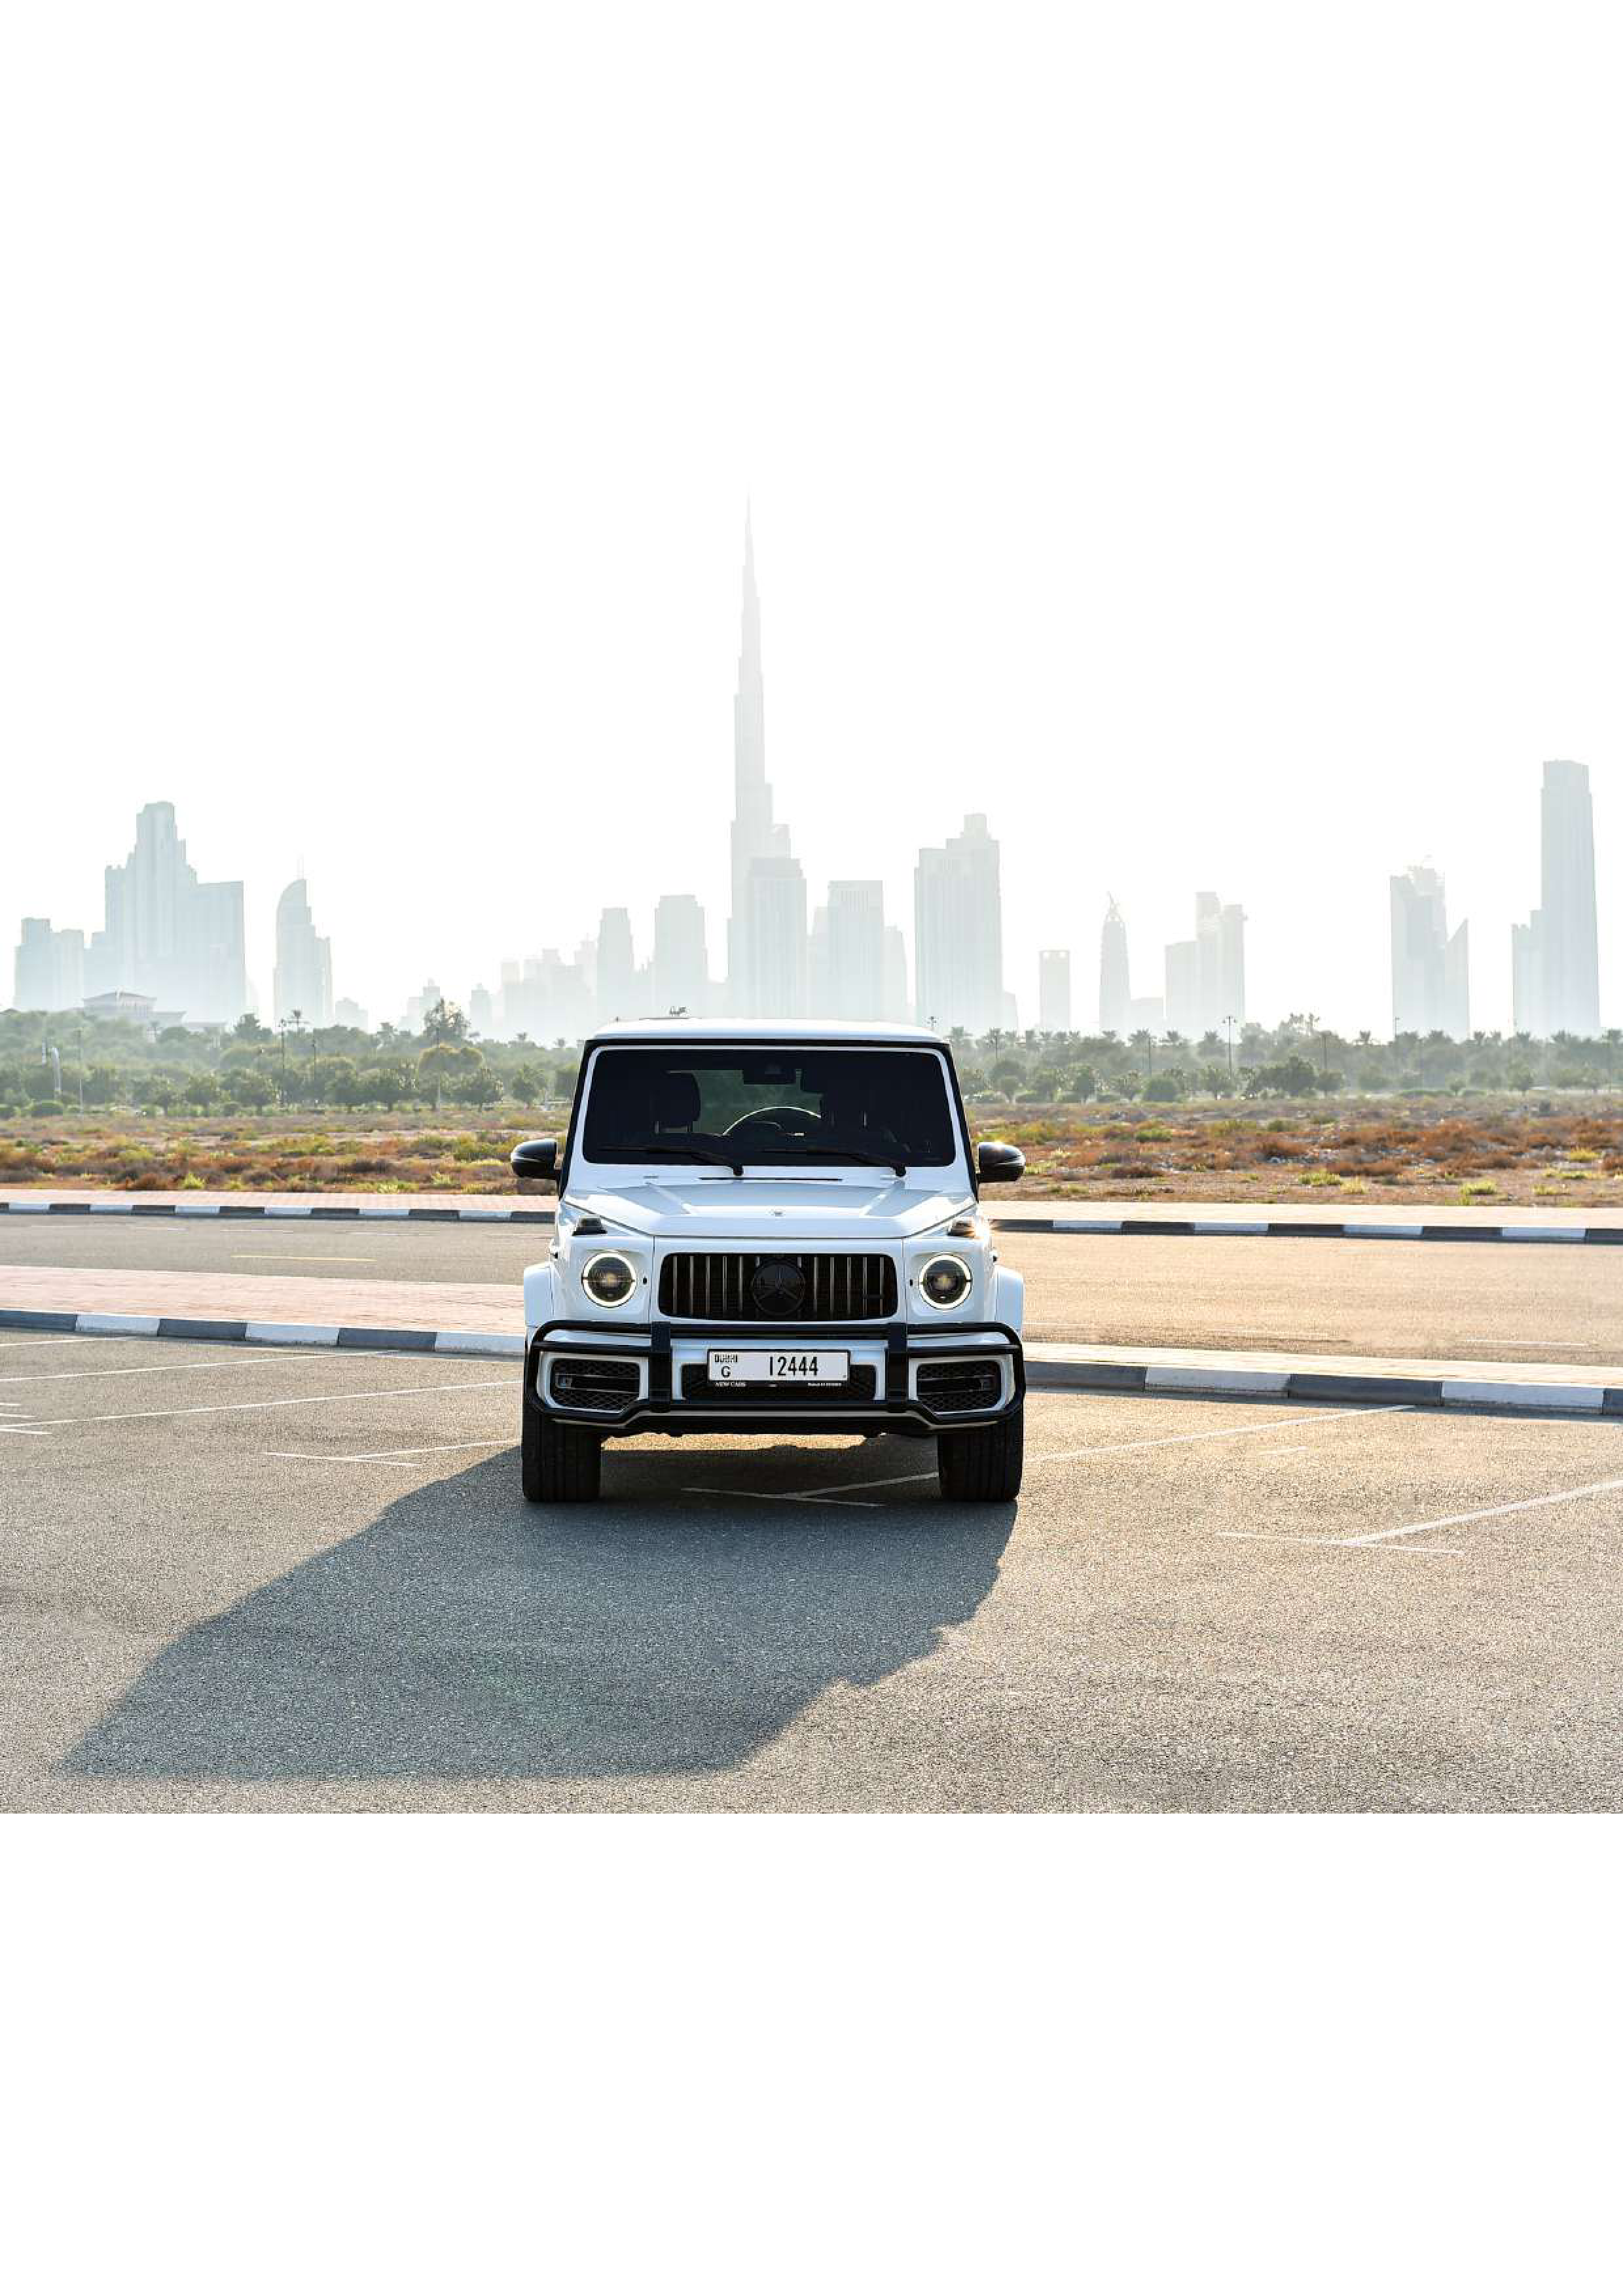 Rent Mercedes Business Bay Dubai Family Trip